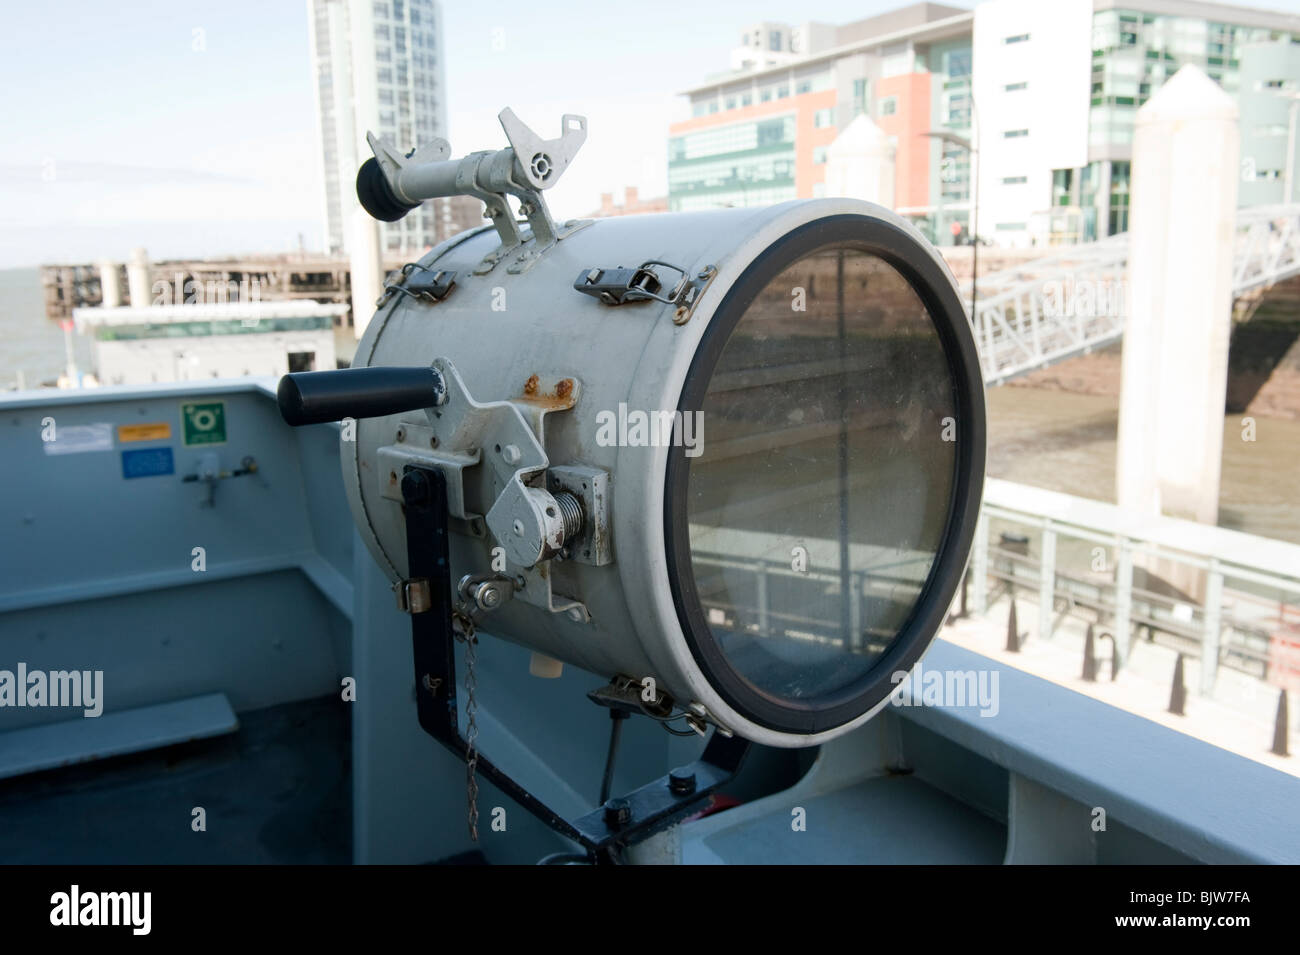 Royal Navy Signal Lamp on disused ship Stock Photo